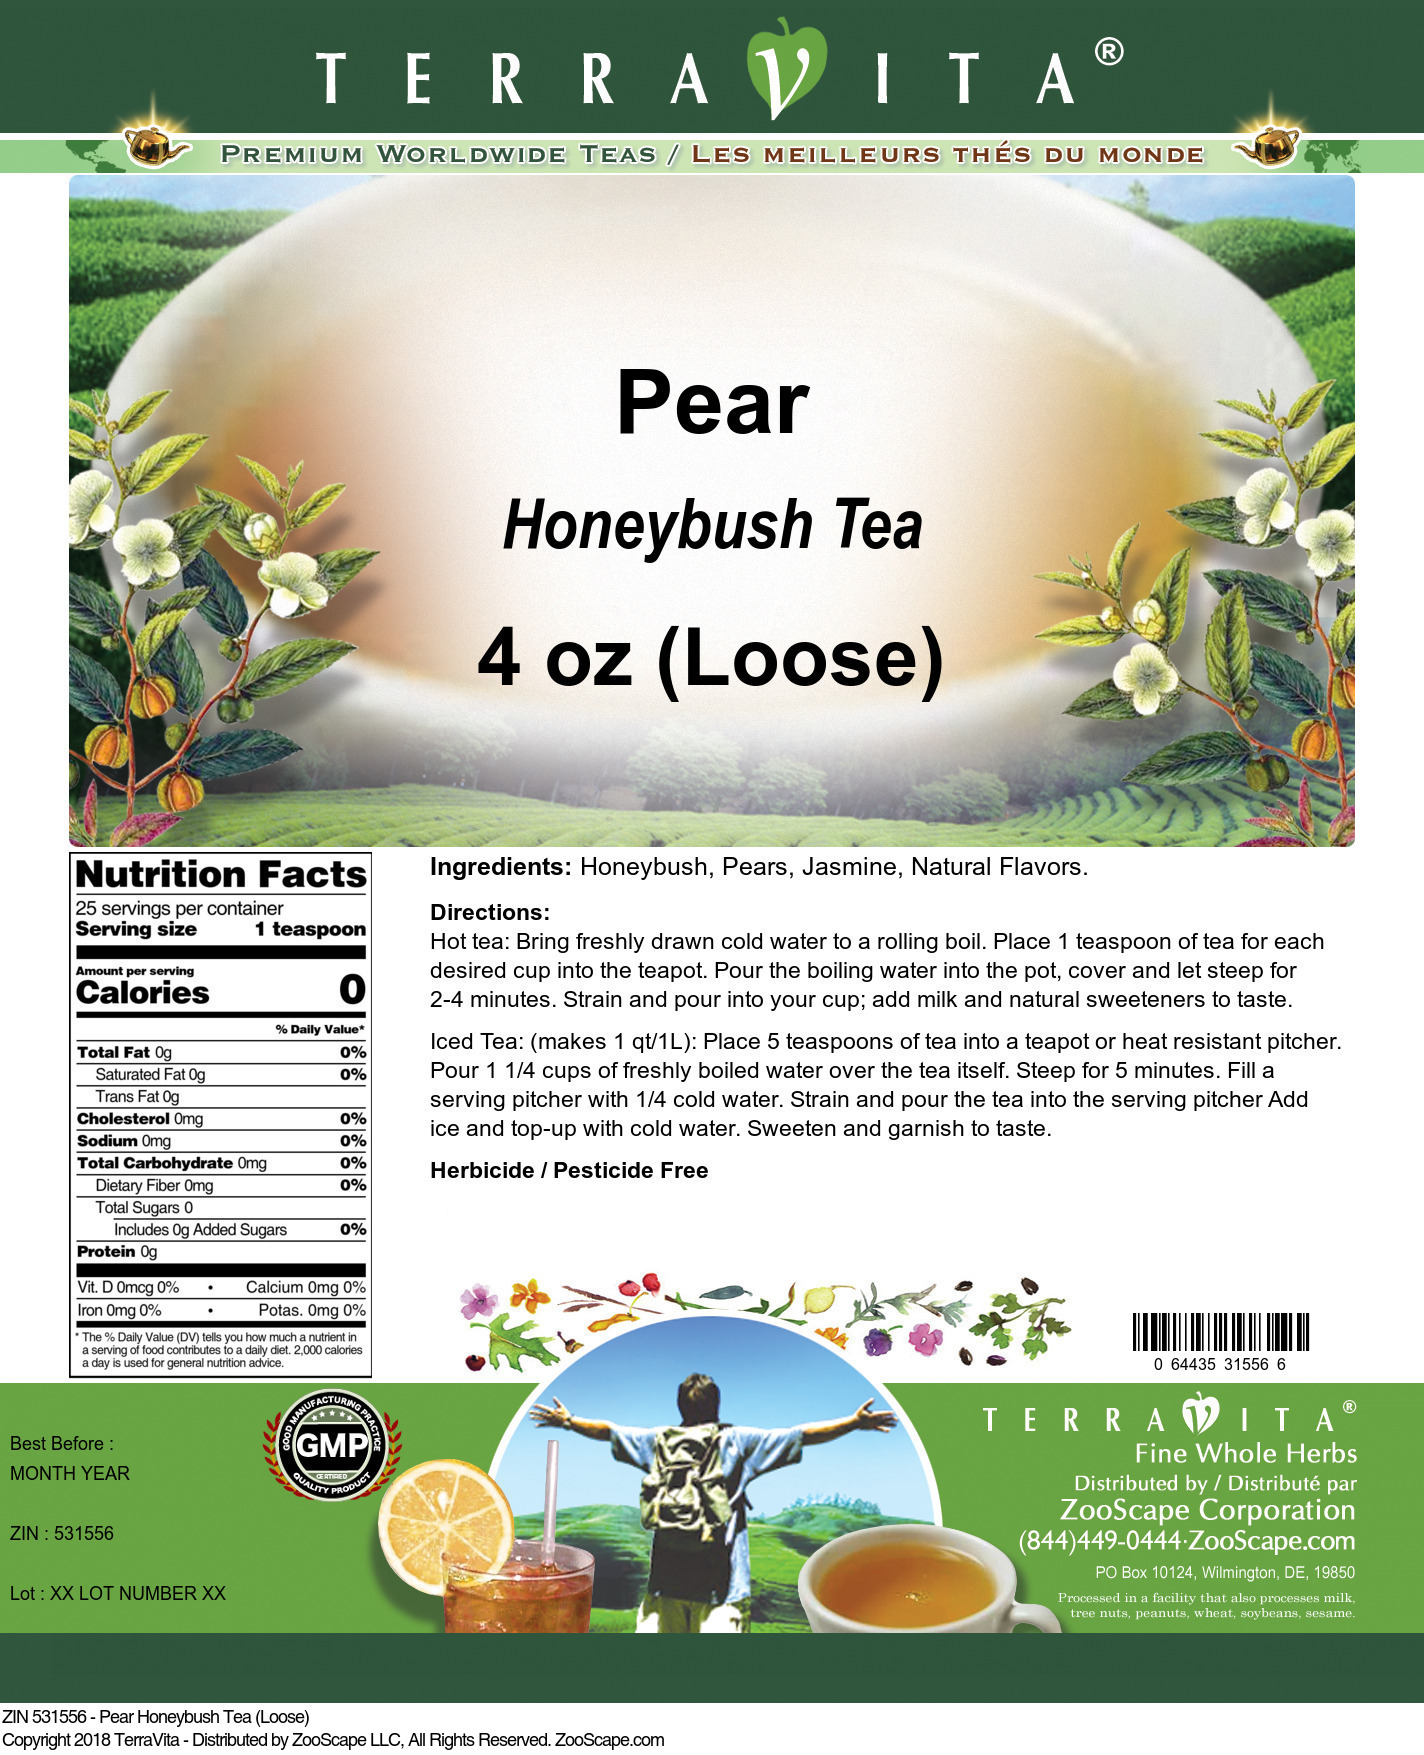 Pear Honeybush Tea (Loose) - Label